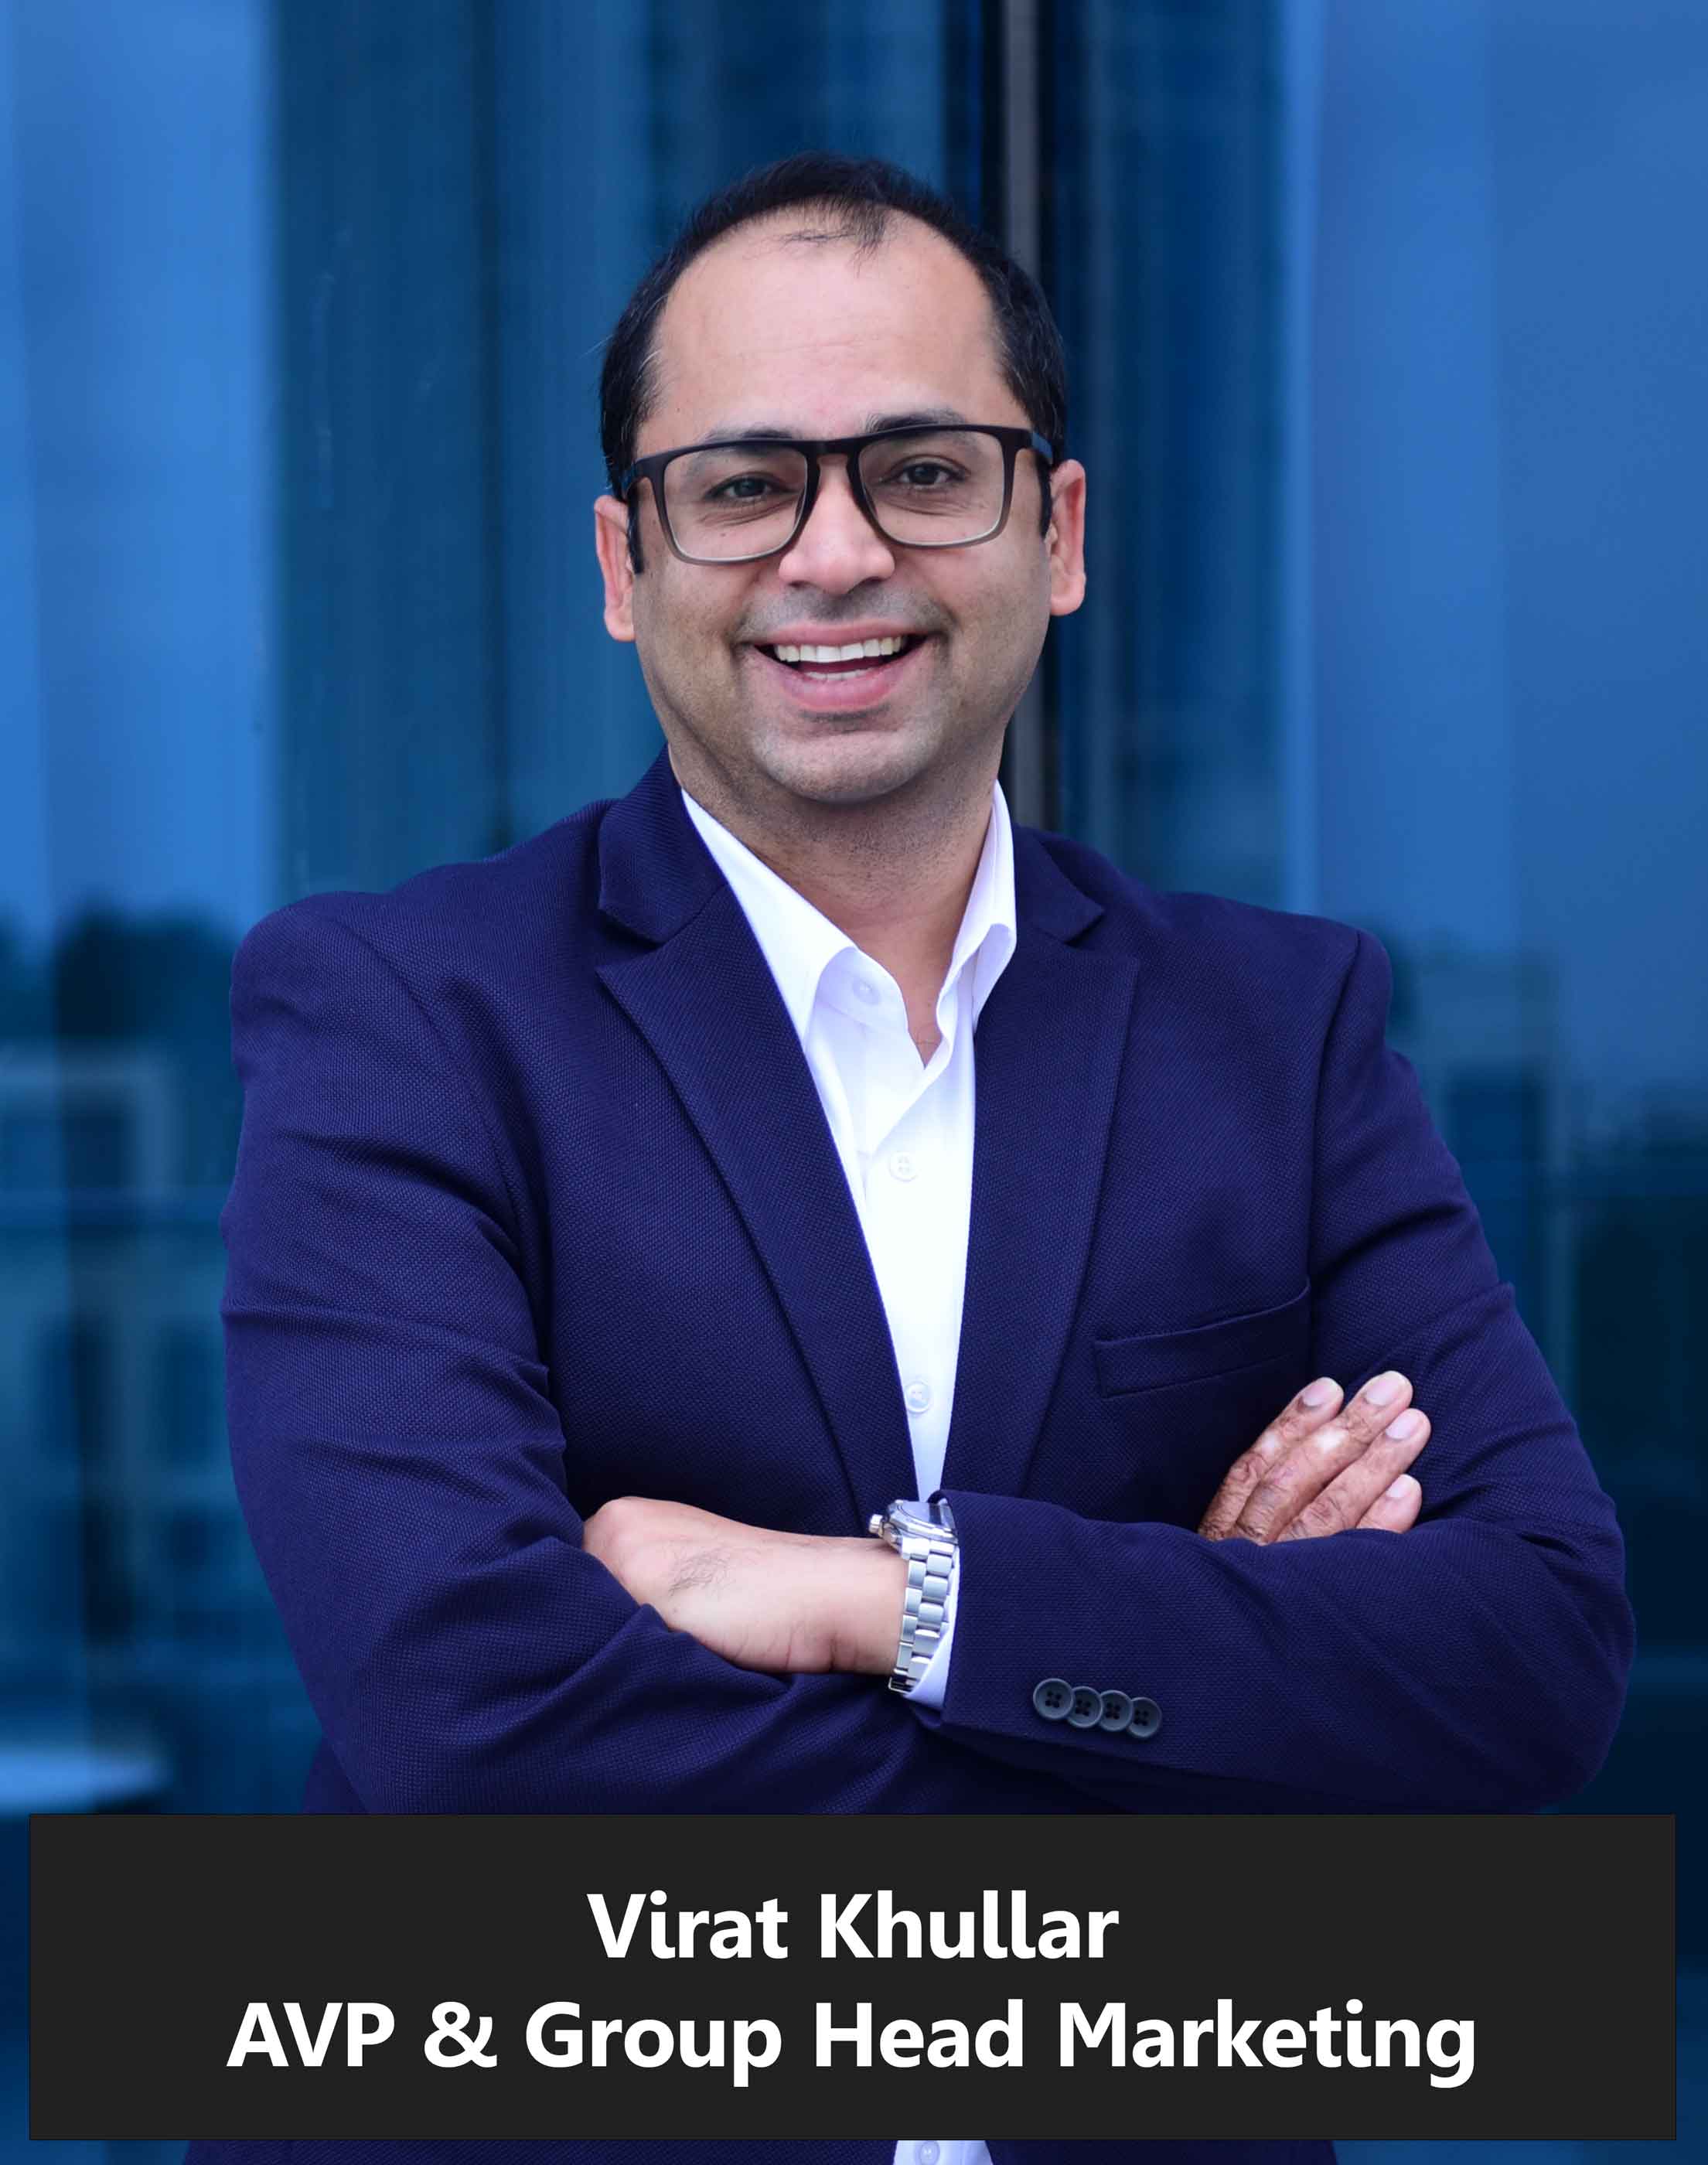 Virat Khullar, AVP & Group Head Marketing